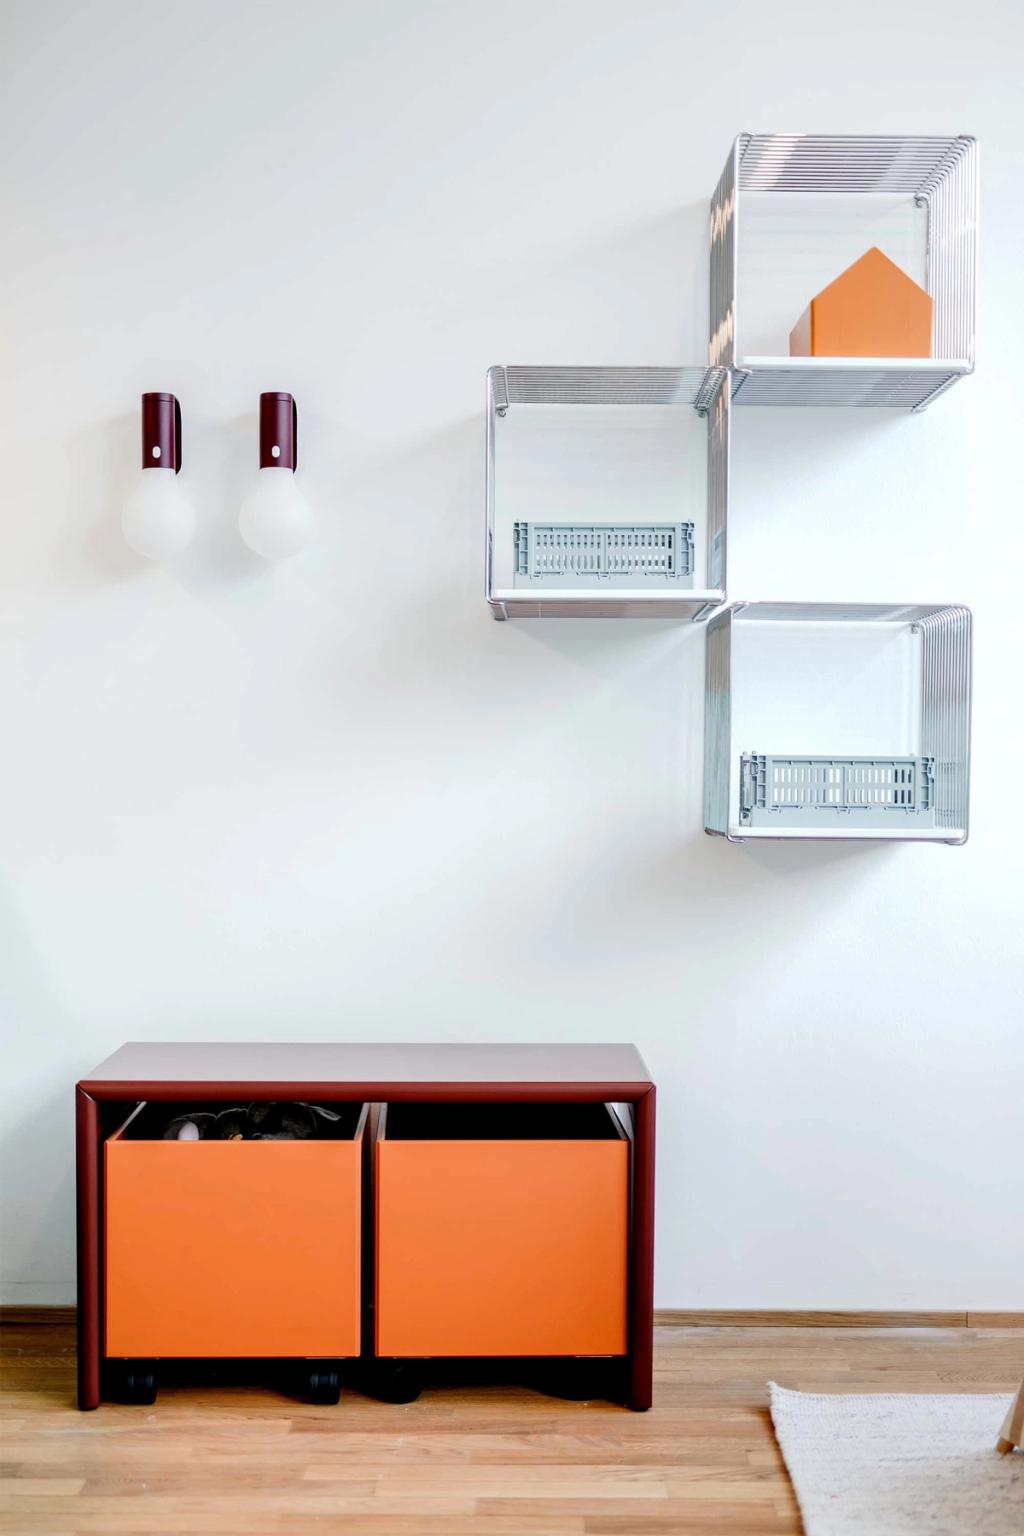 A interior design project by Bureau EA